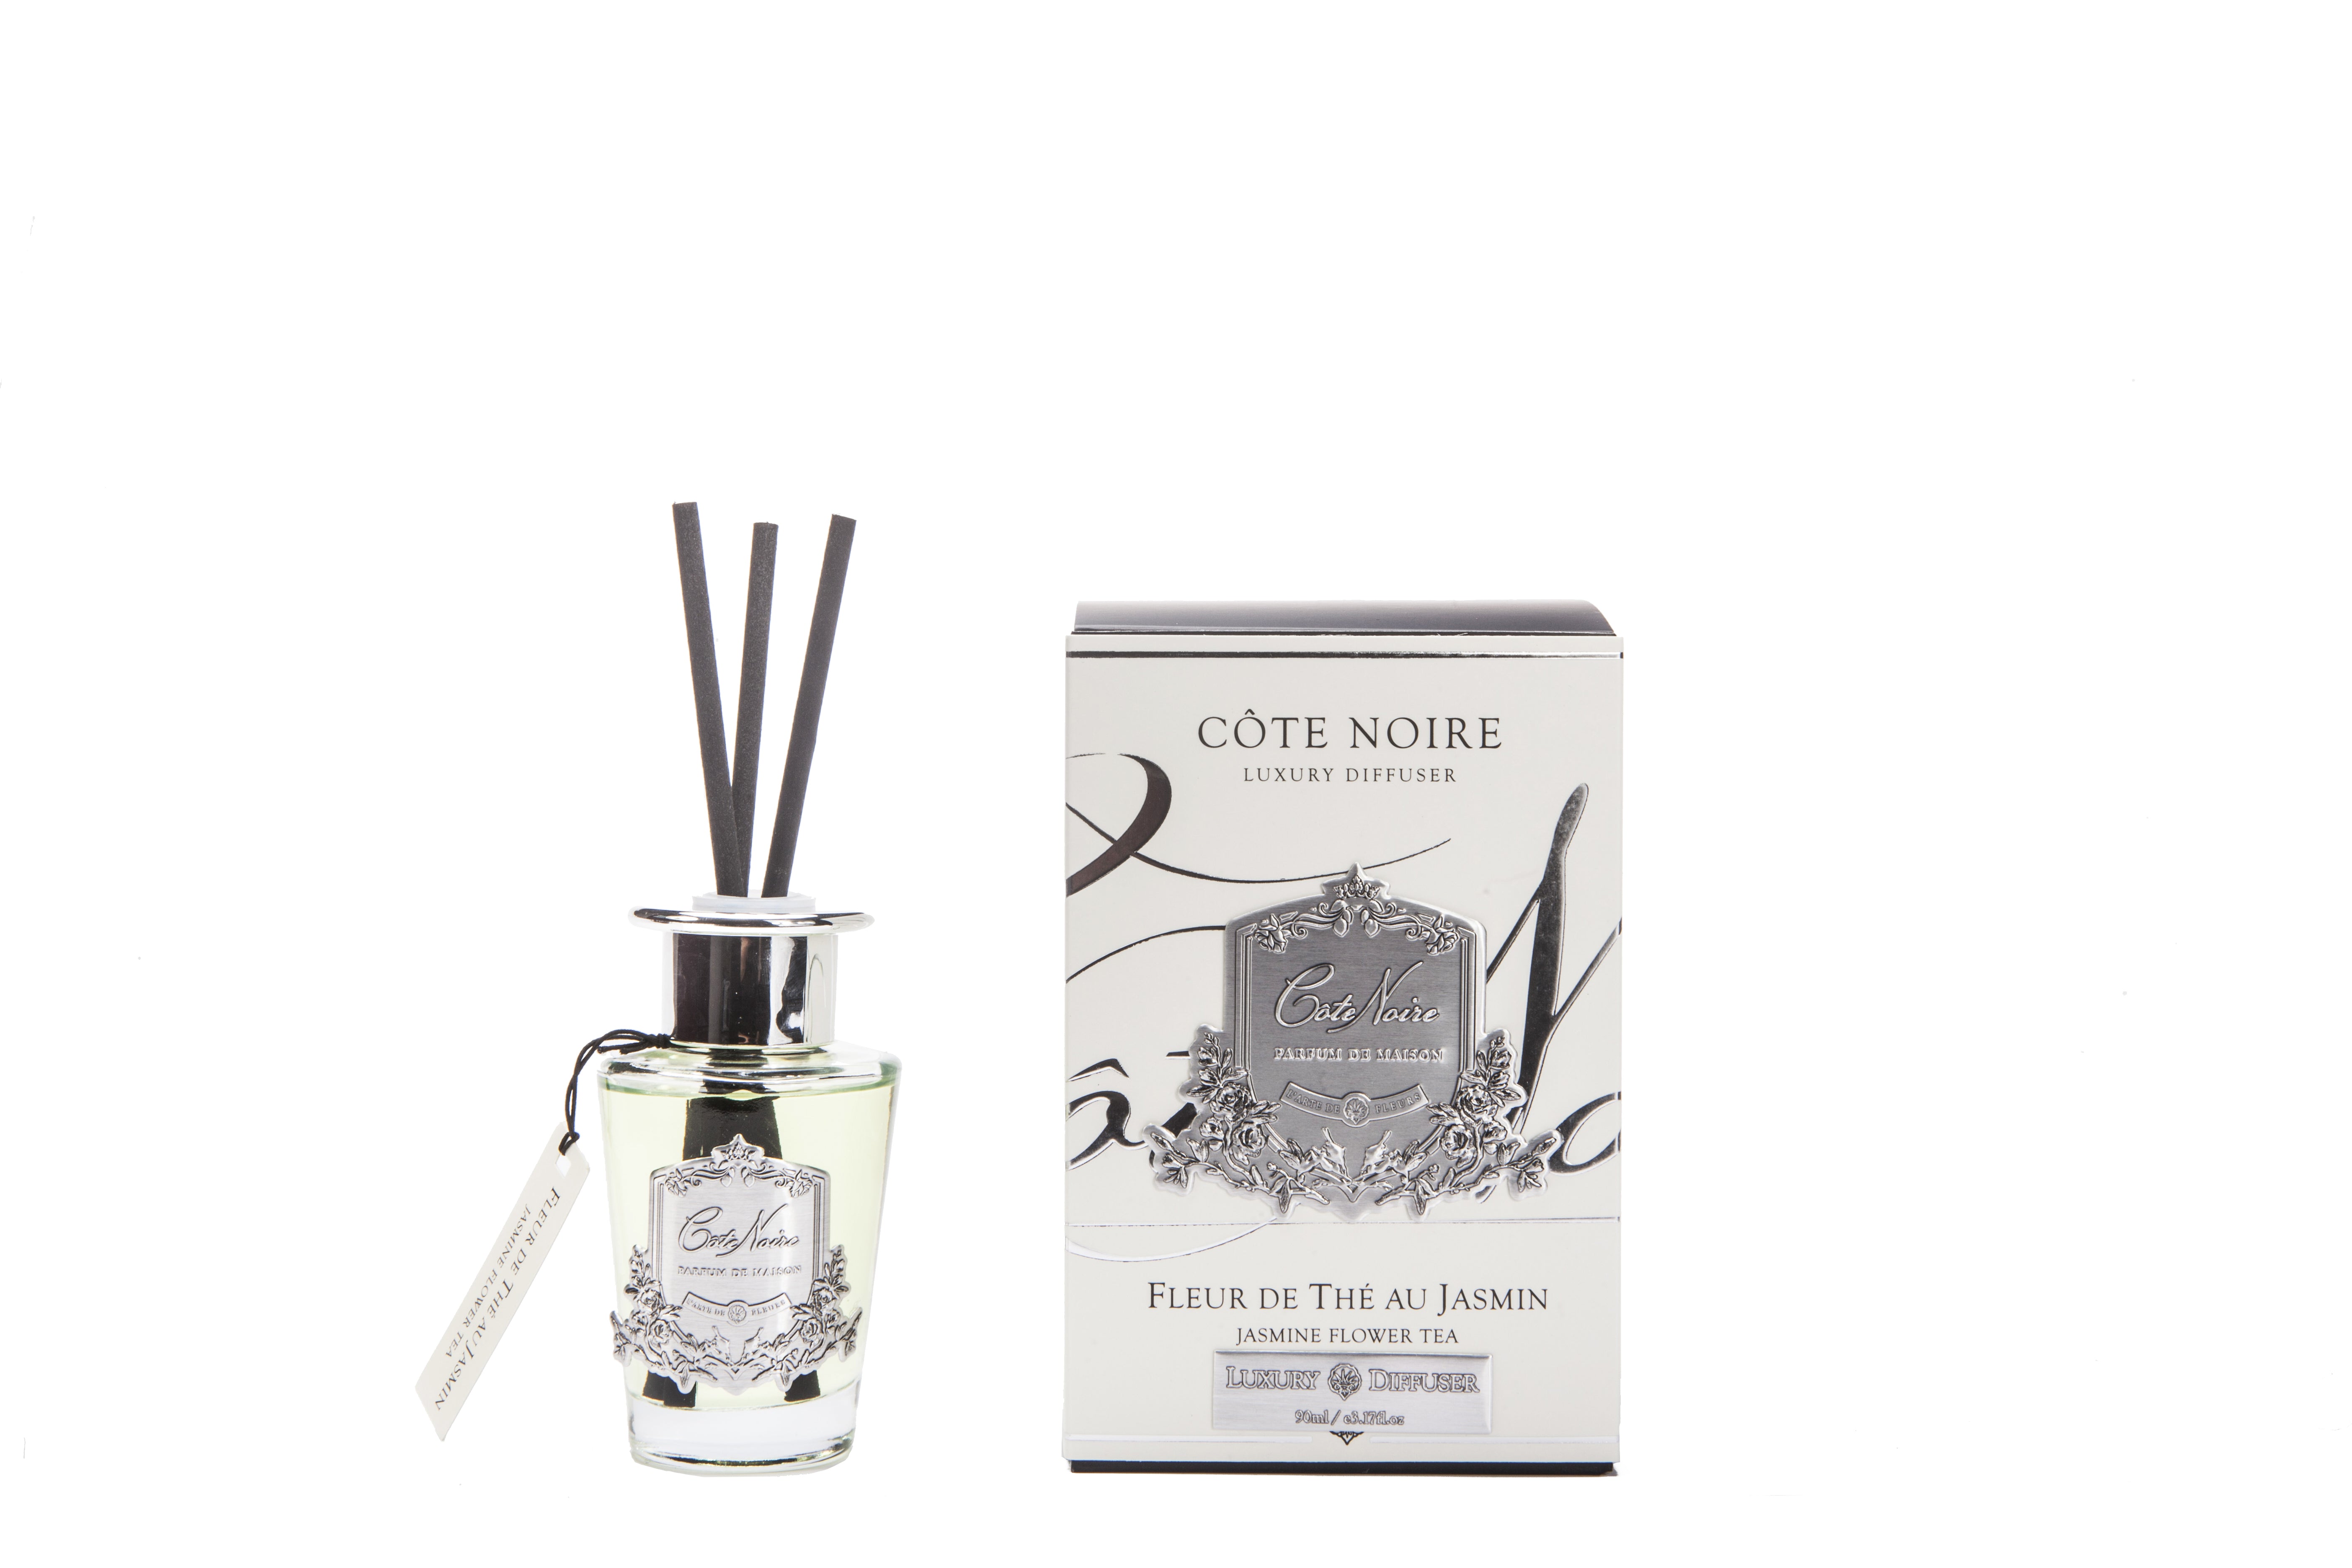 Cote Noire - Jasmine Flower Tea - 90ml Silver Diffuser